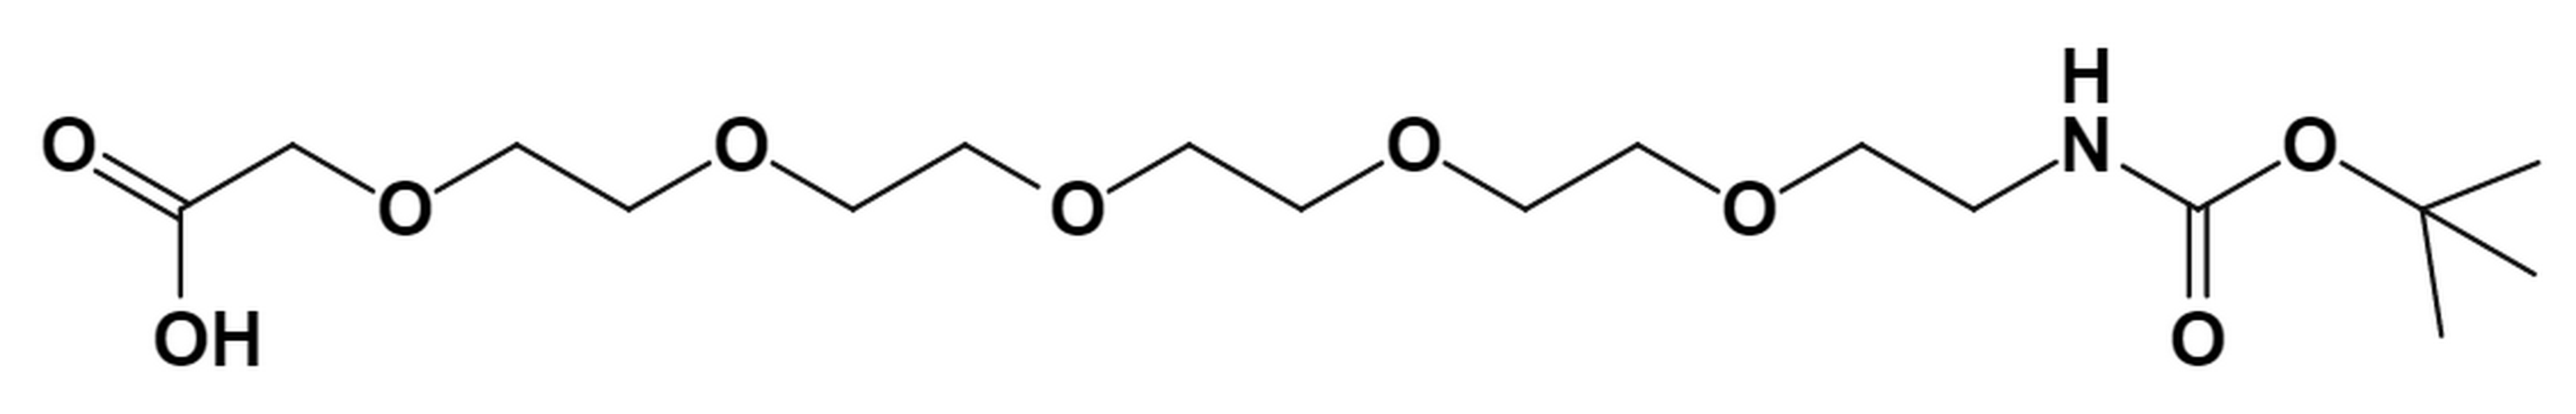 t-Boc-N-amido-PEG5-CH2COOH